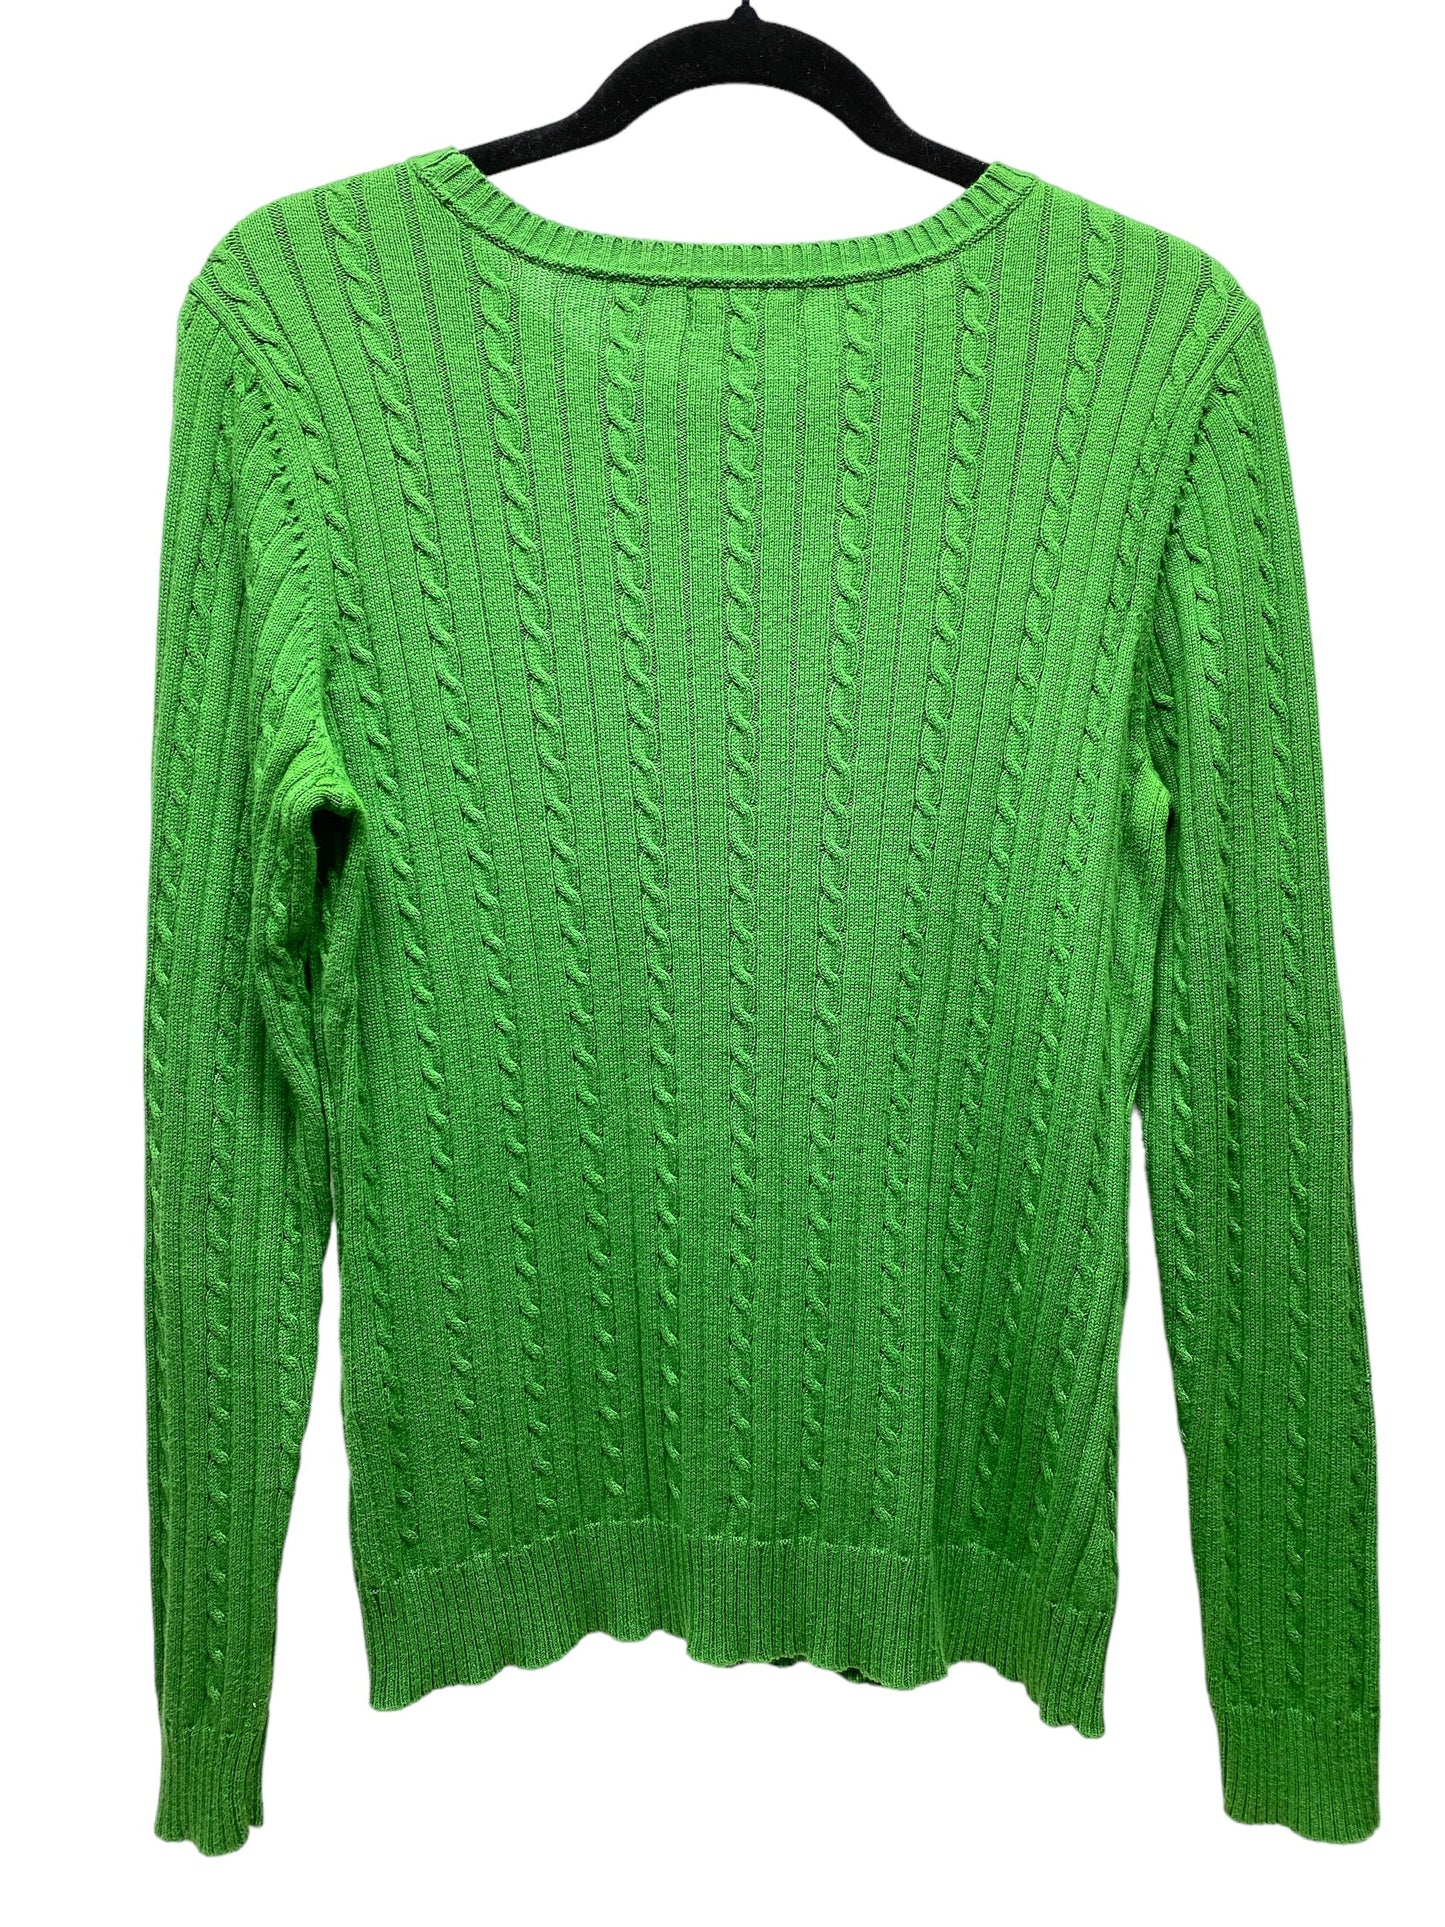 Sweater By Izod  Size: M